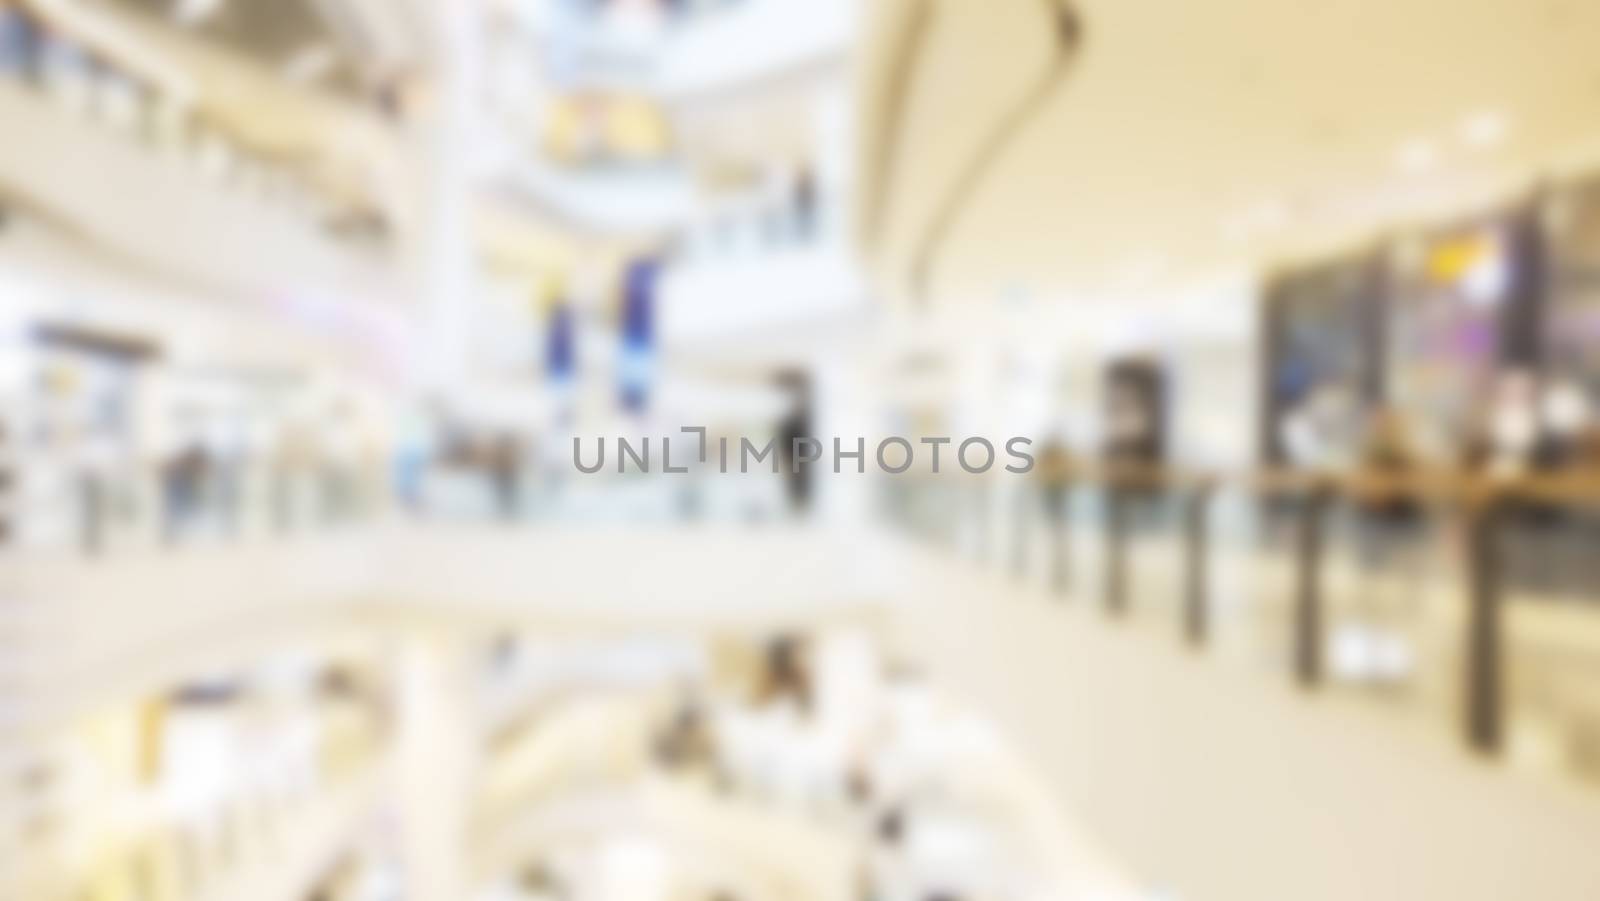 Blur shopping mall background.